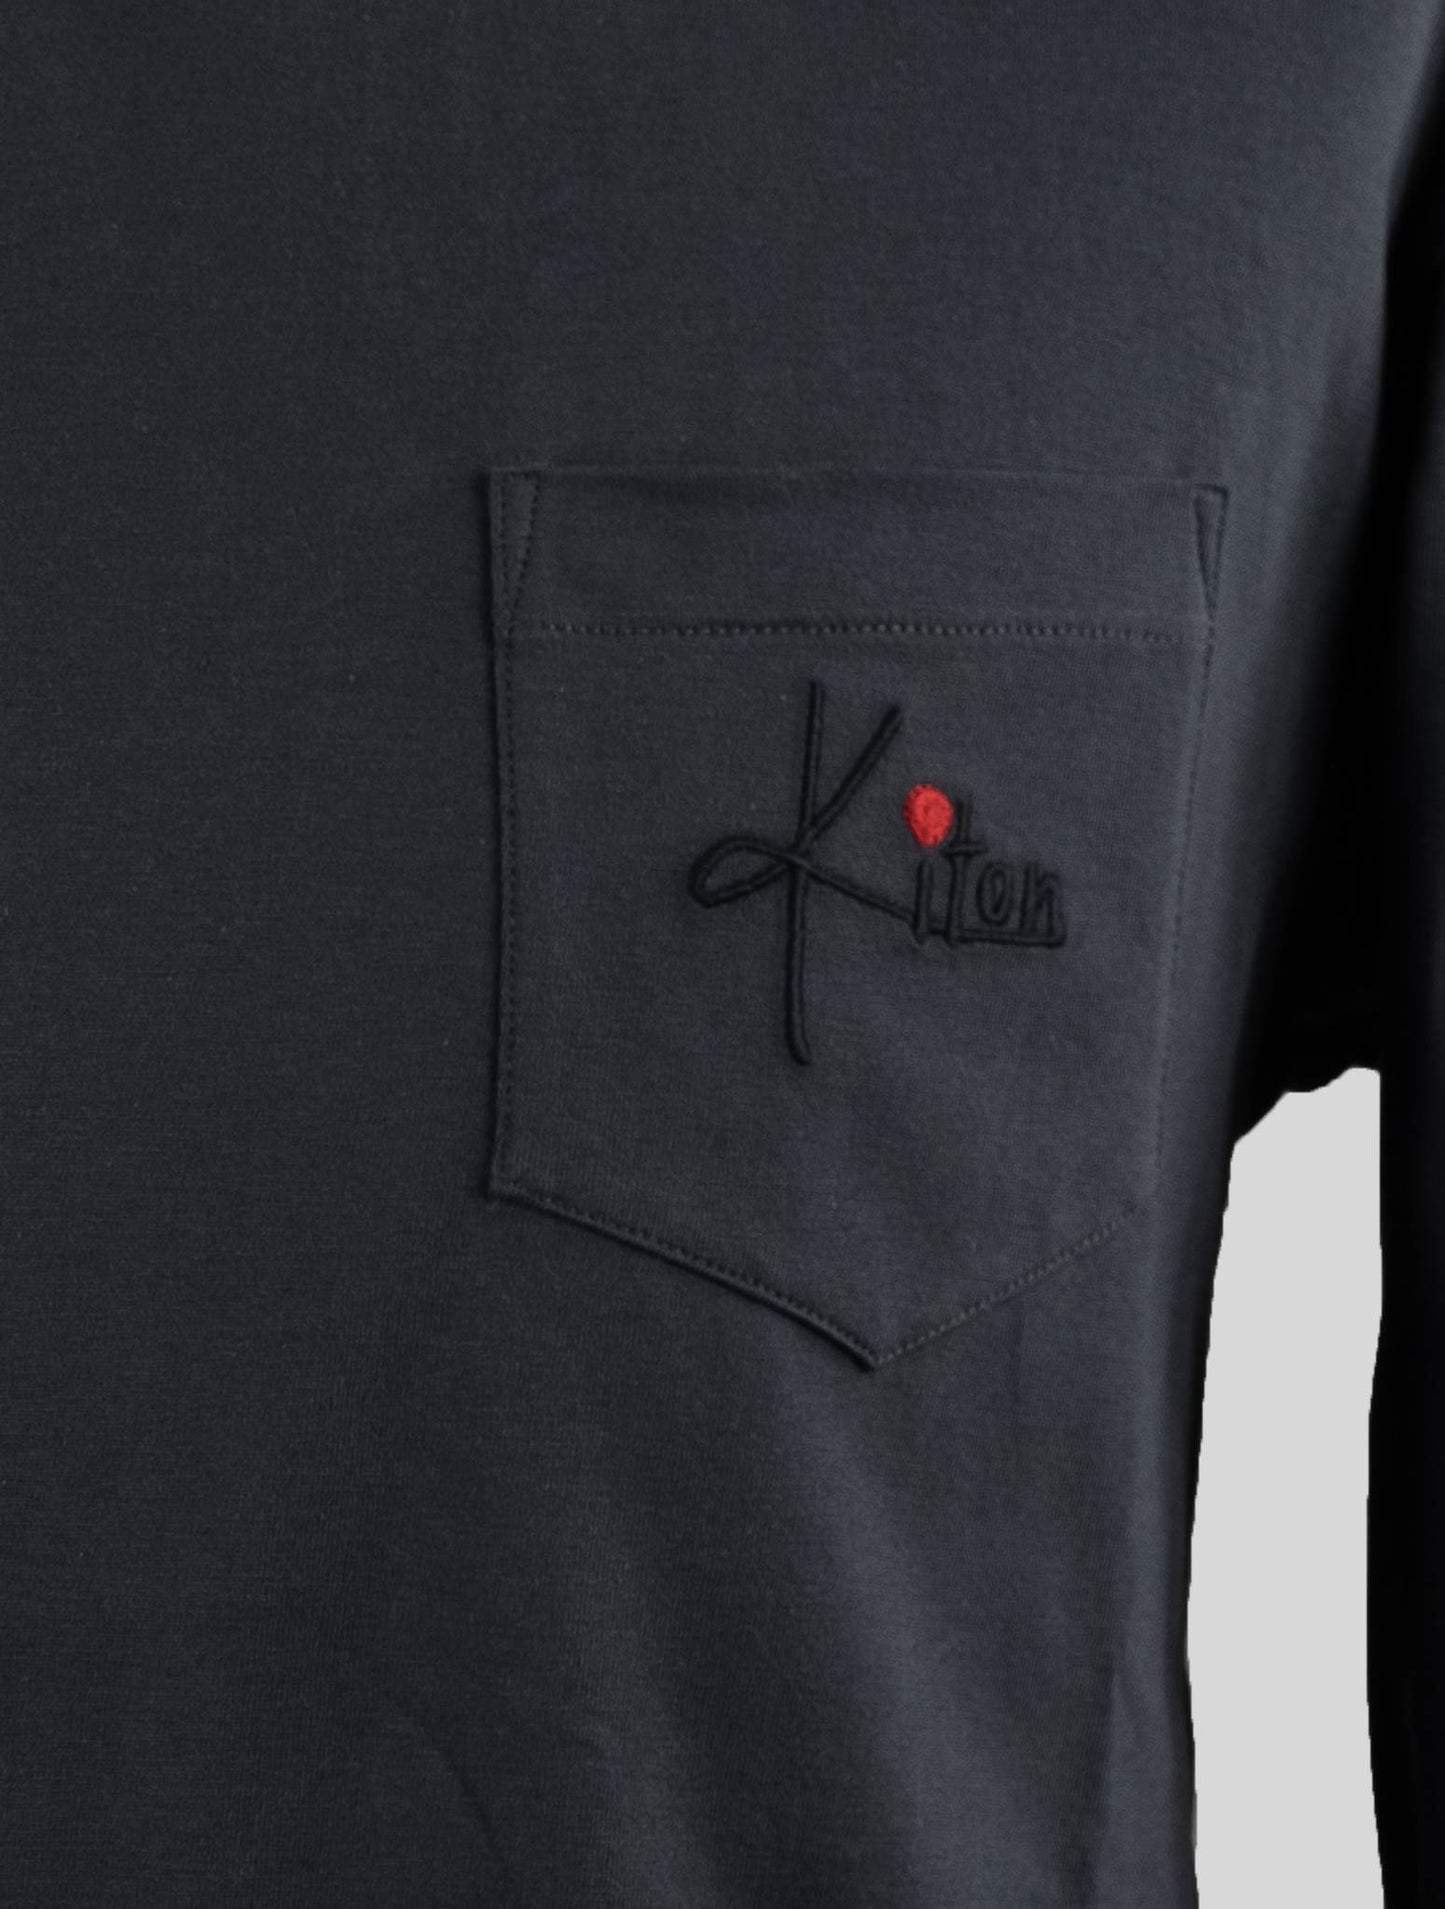 Kiton Gray Cotton Long Sleeve T-Shirt